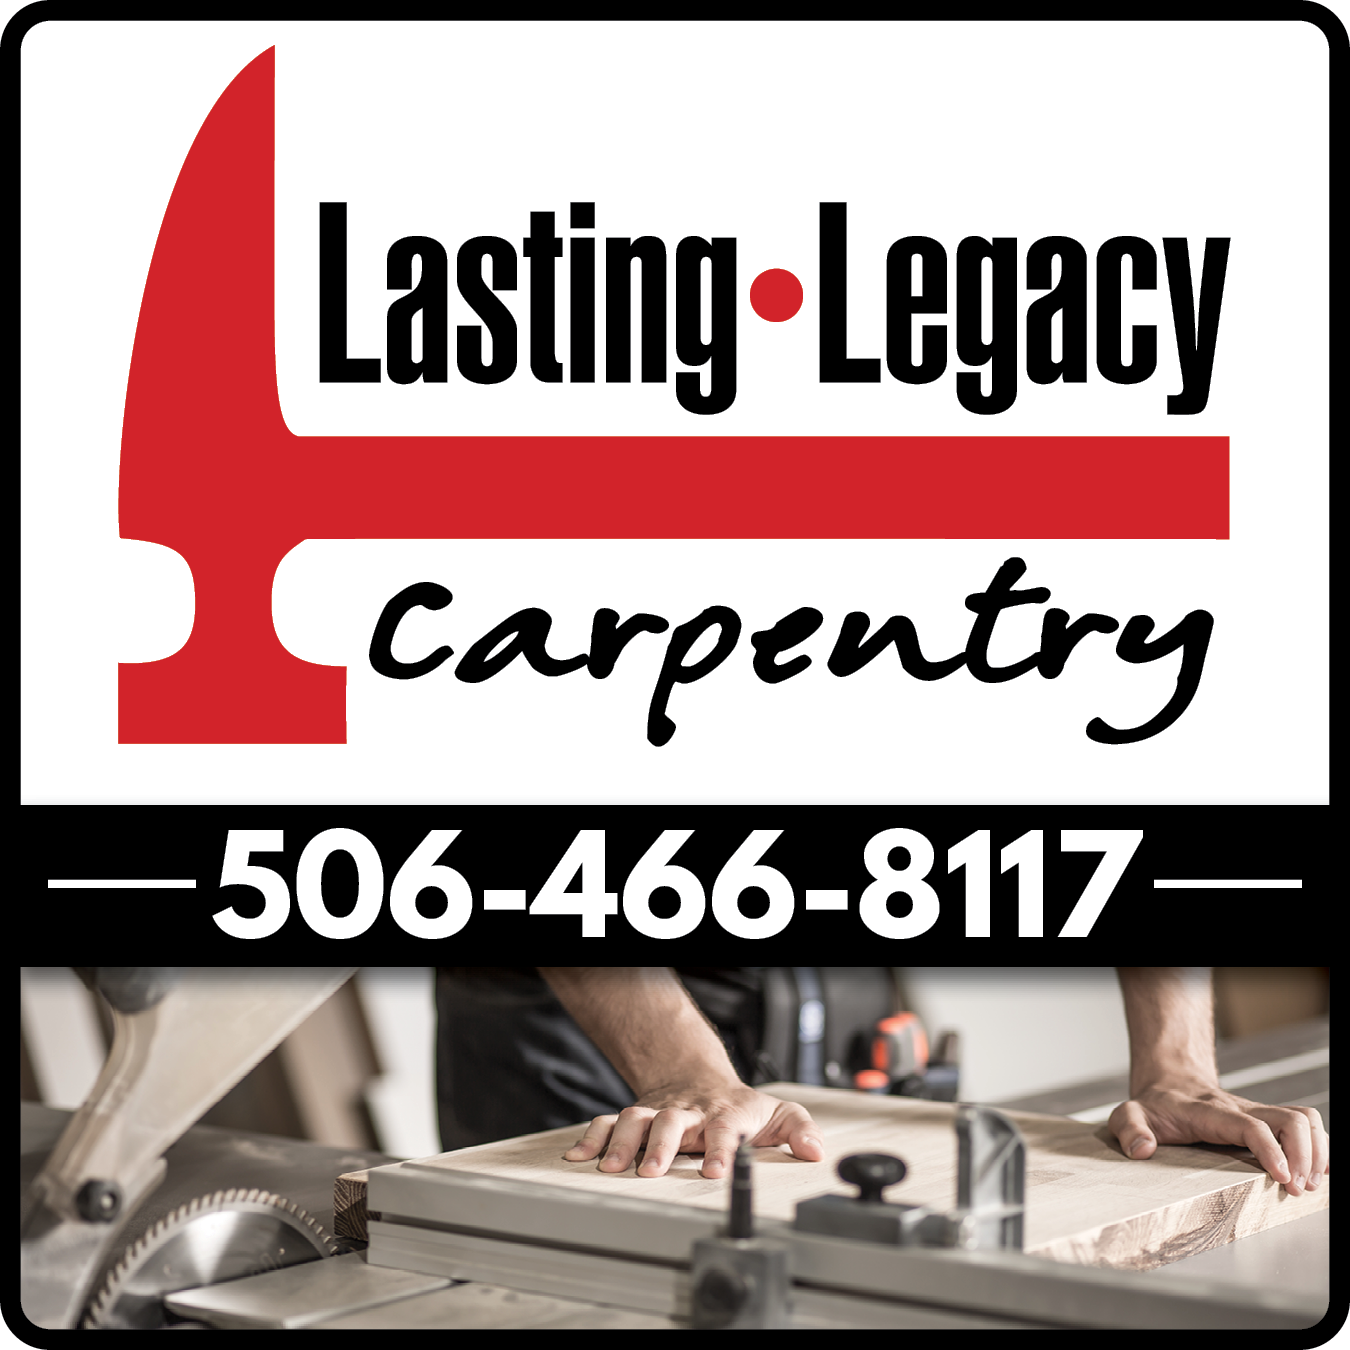 Lasting Legacy Carpentry